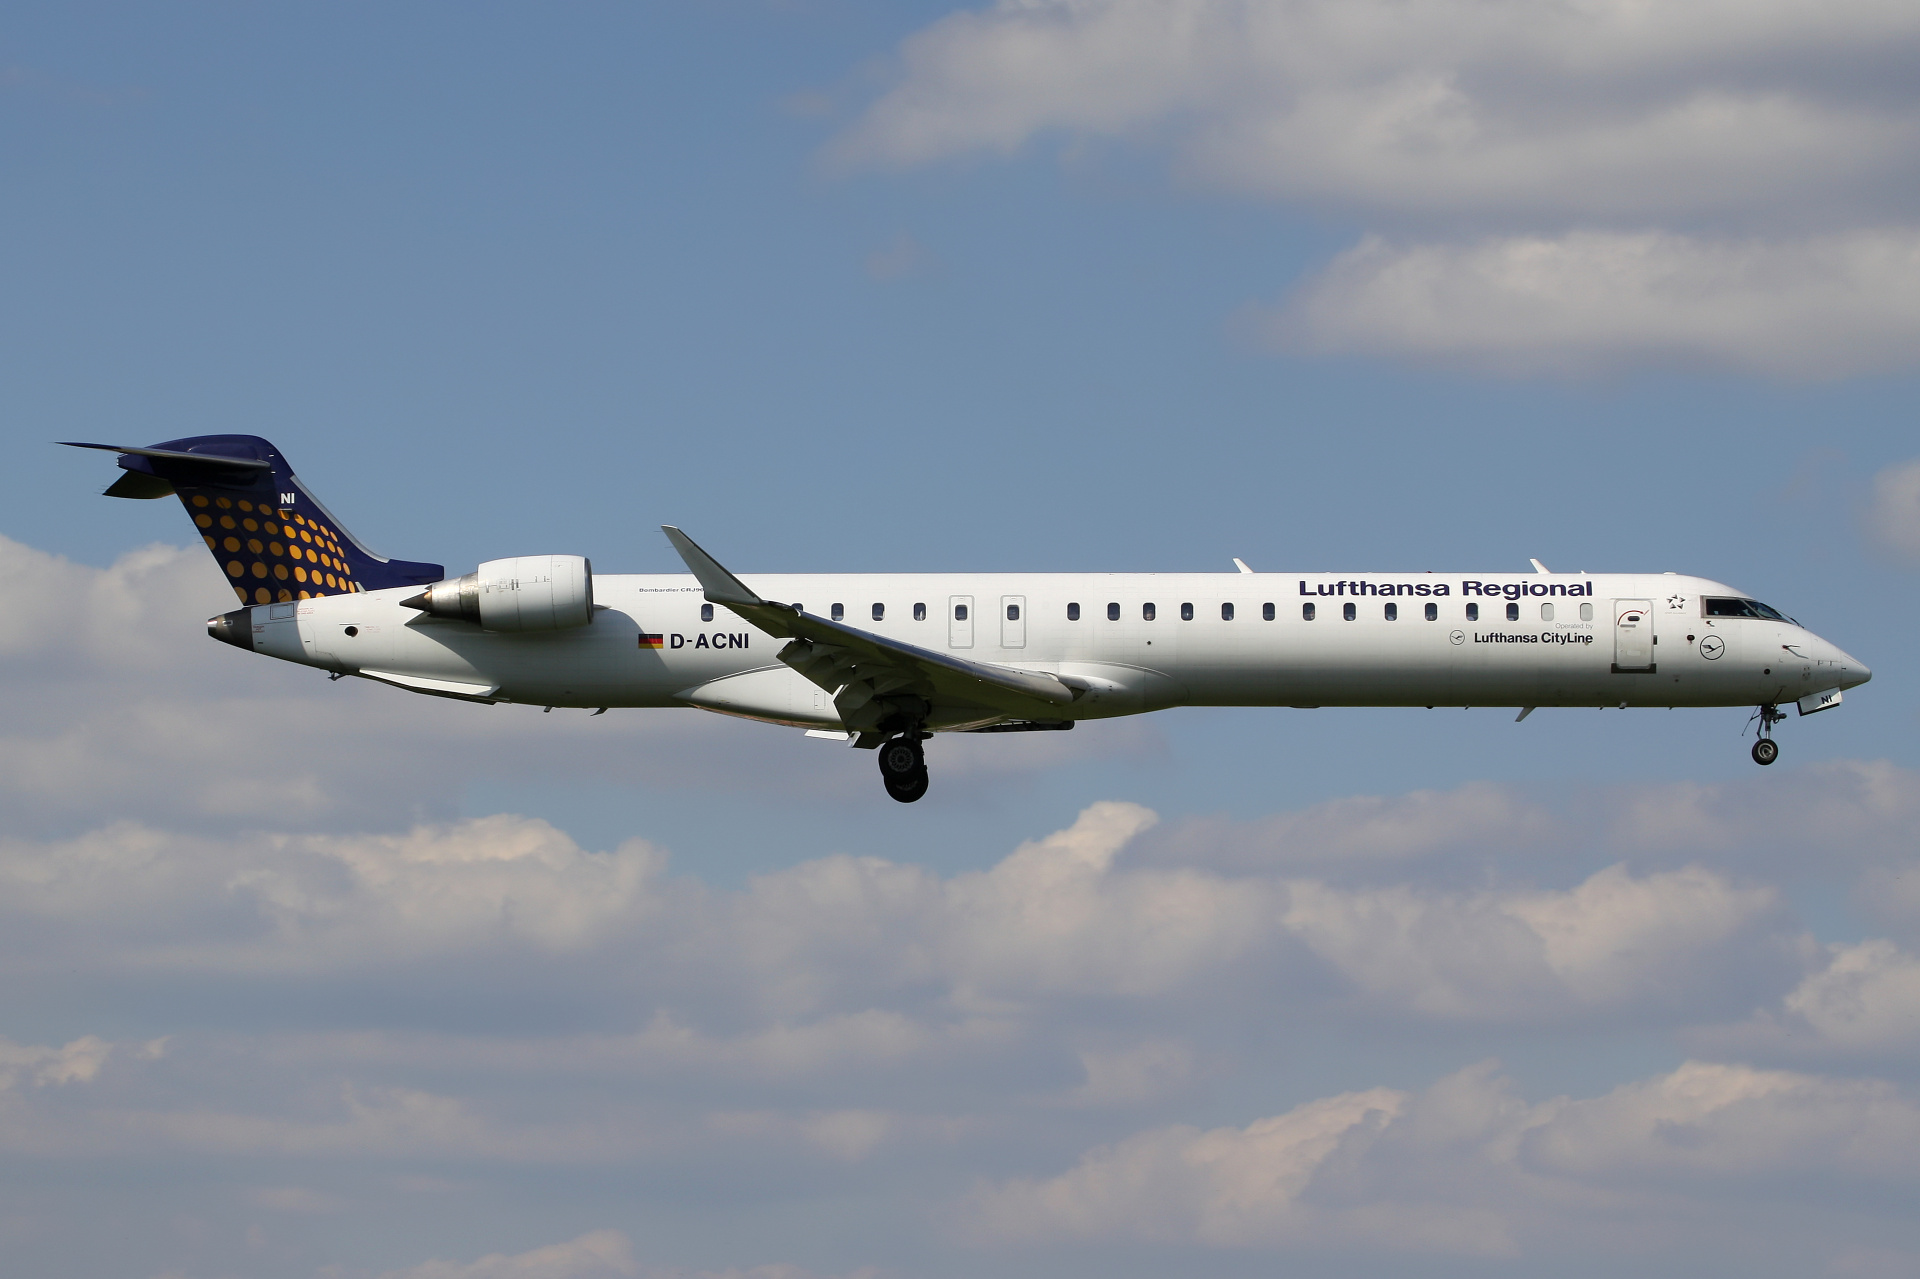 D-ACNI, Lufthansa Regional (Lufthansa CityLine) (Aircraft » EPWA Spotting » Mitsubishi Regional Jet » CRJ-900)